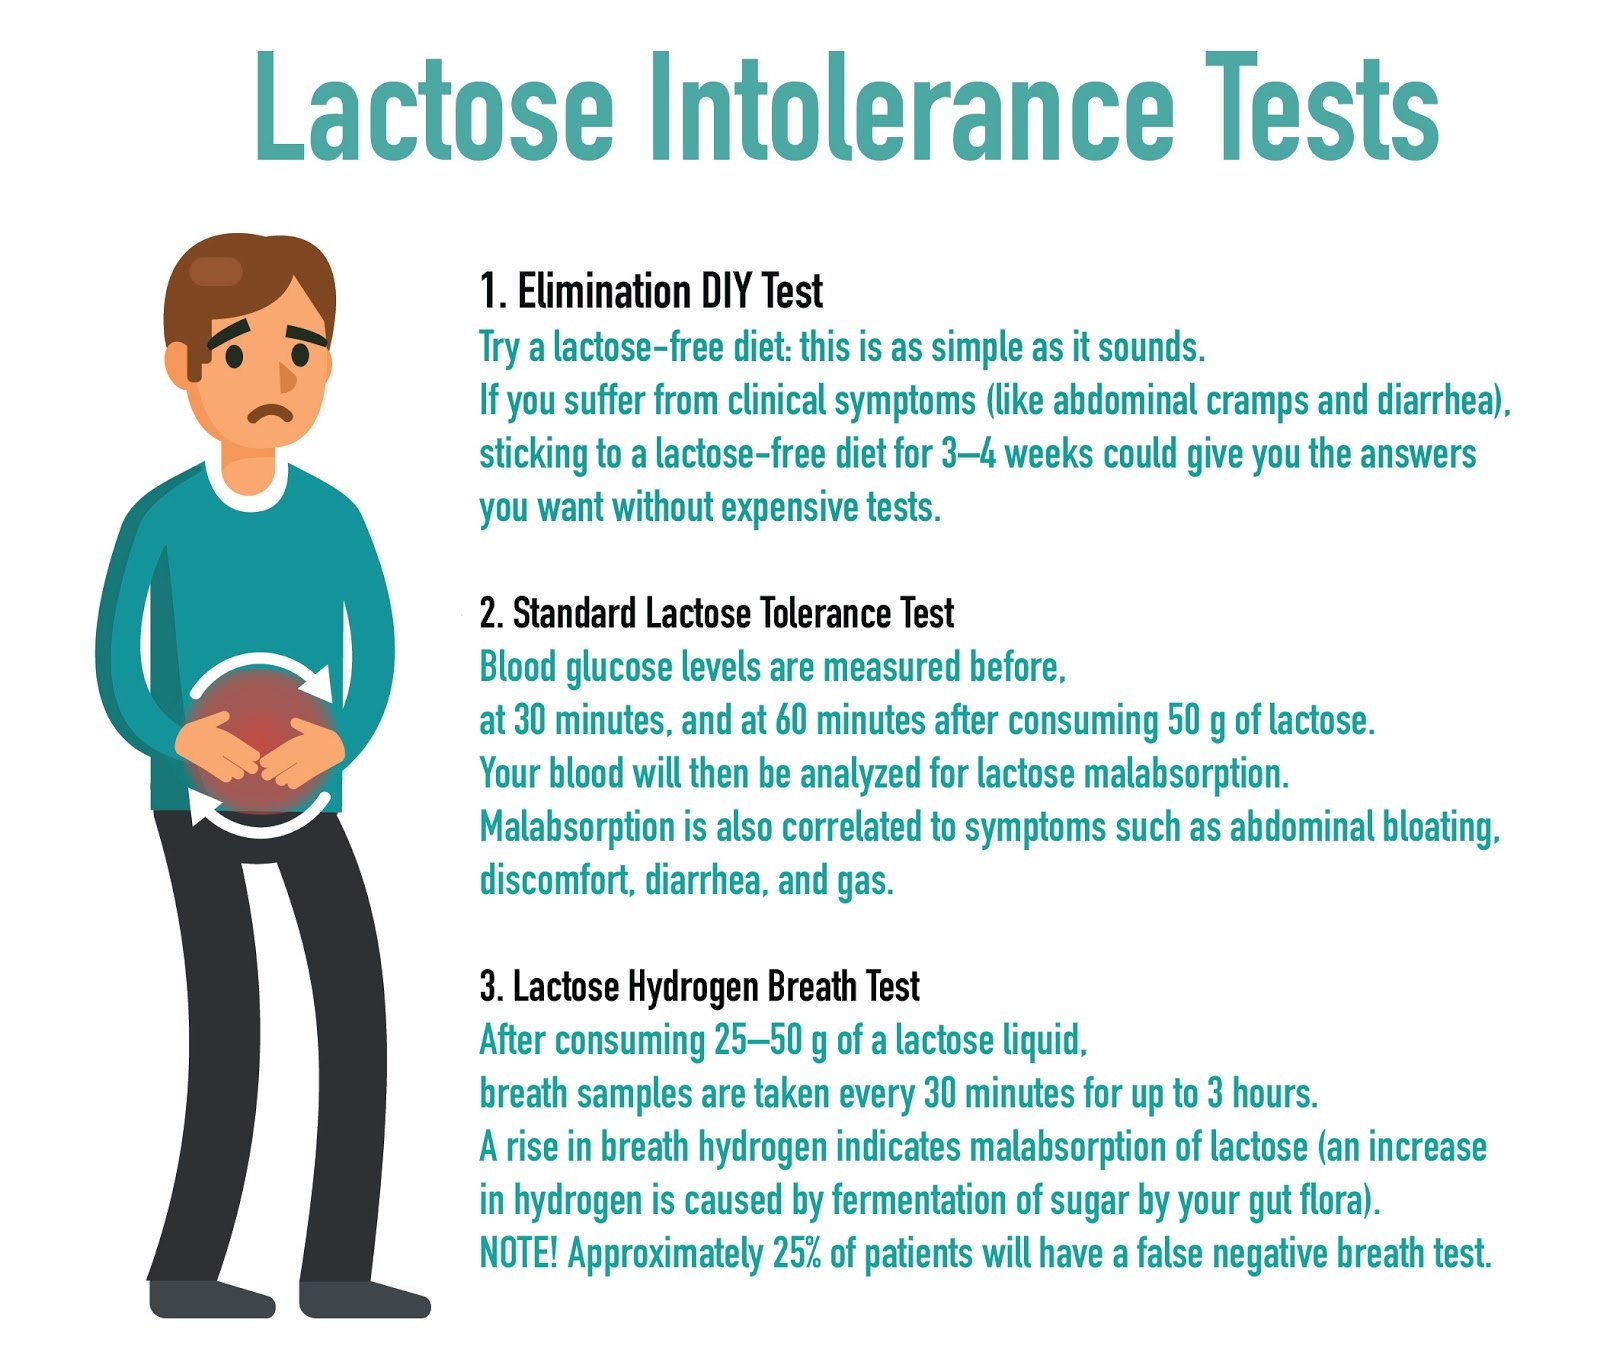 Lactose Intolerance: Causes, Symptoms, and Treatment